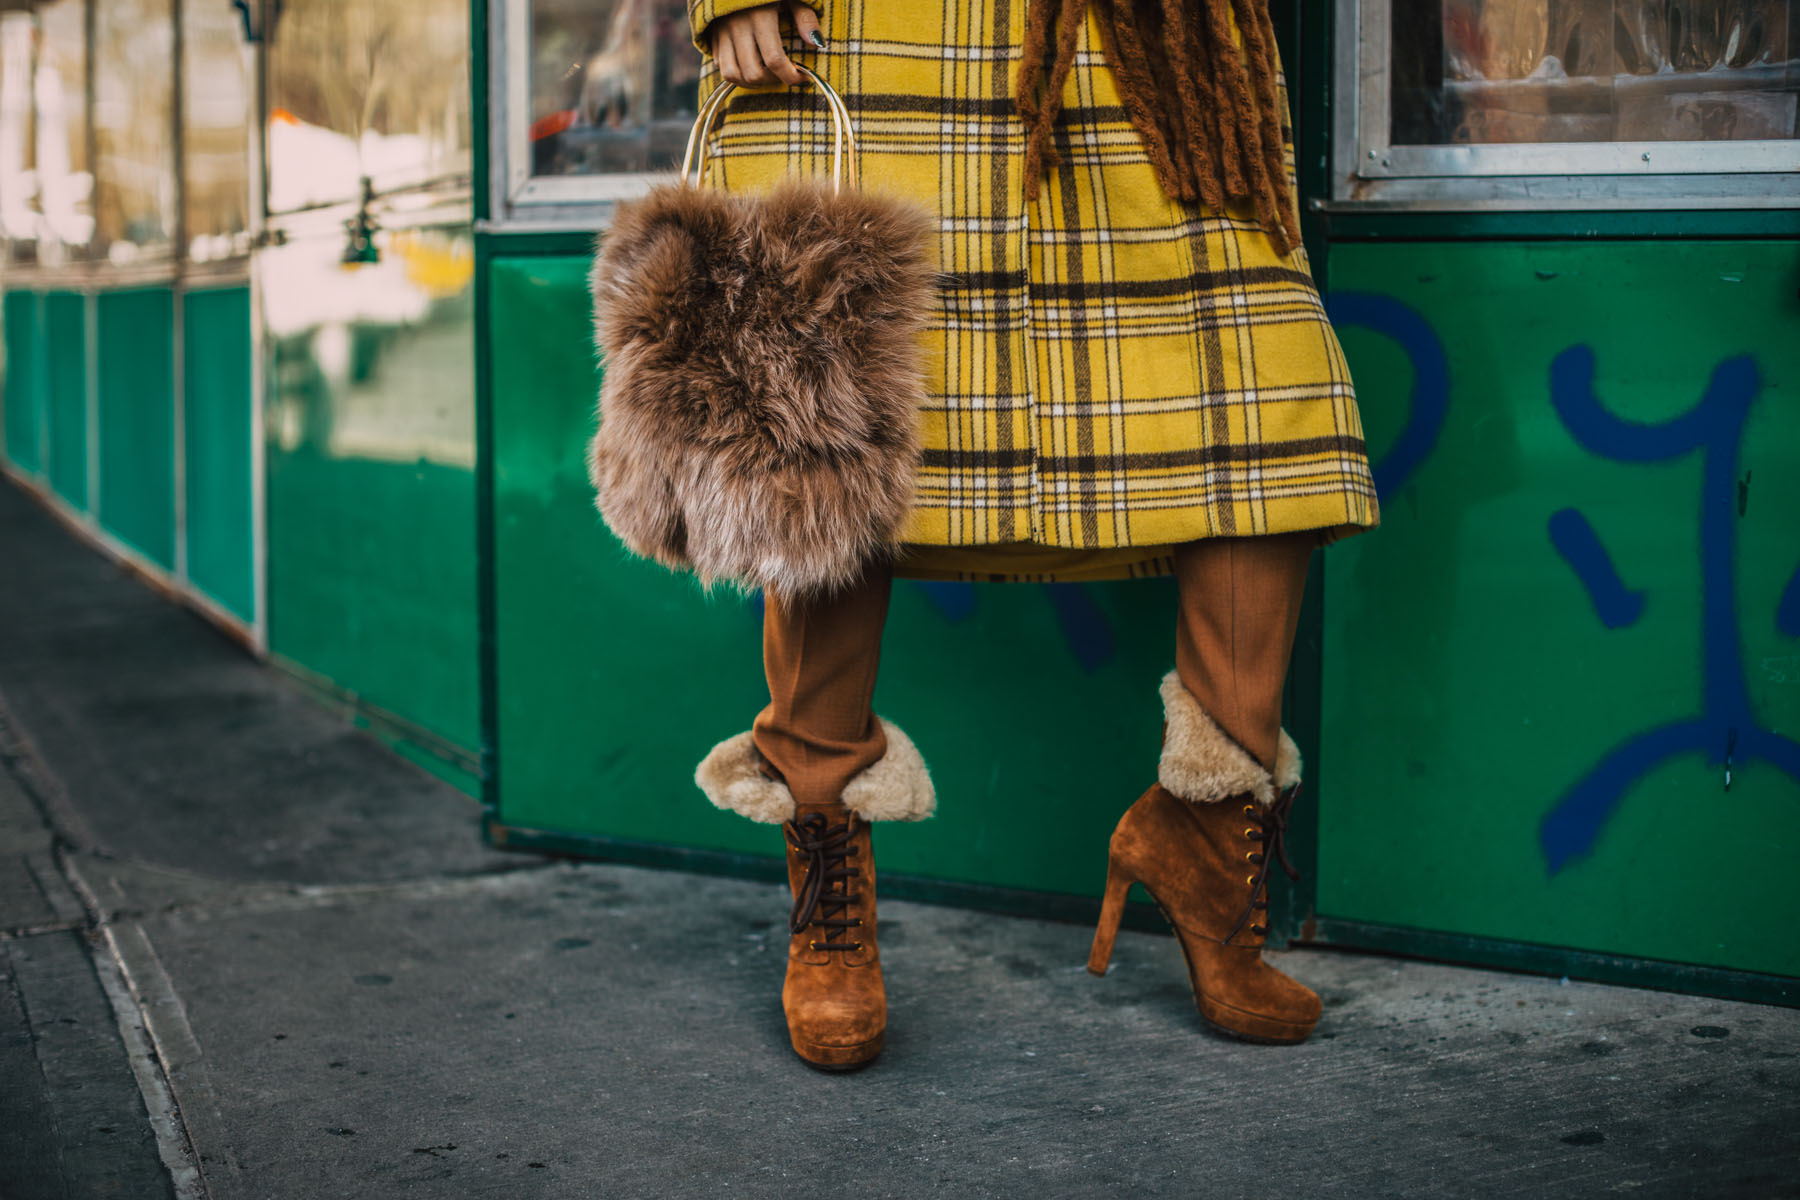 best fall 2019 boots, faux fur boots, New York Fashion Blogger, yellow plaid coat, chunky scarf, fur handbag // Notjessfashion.com